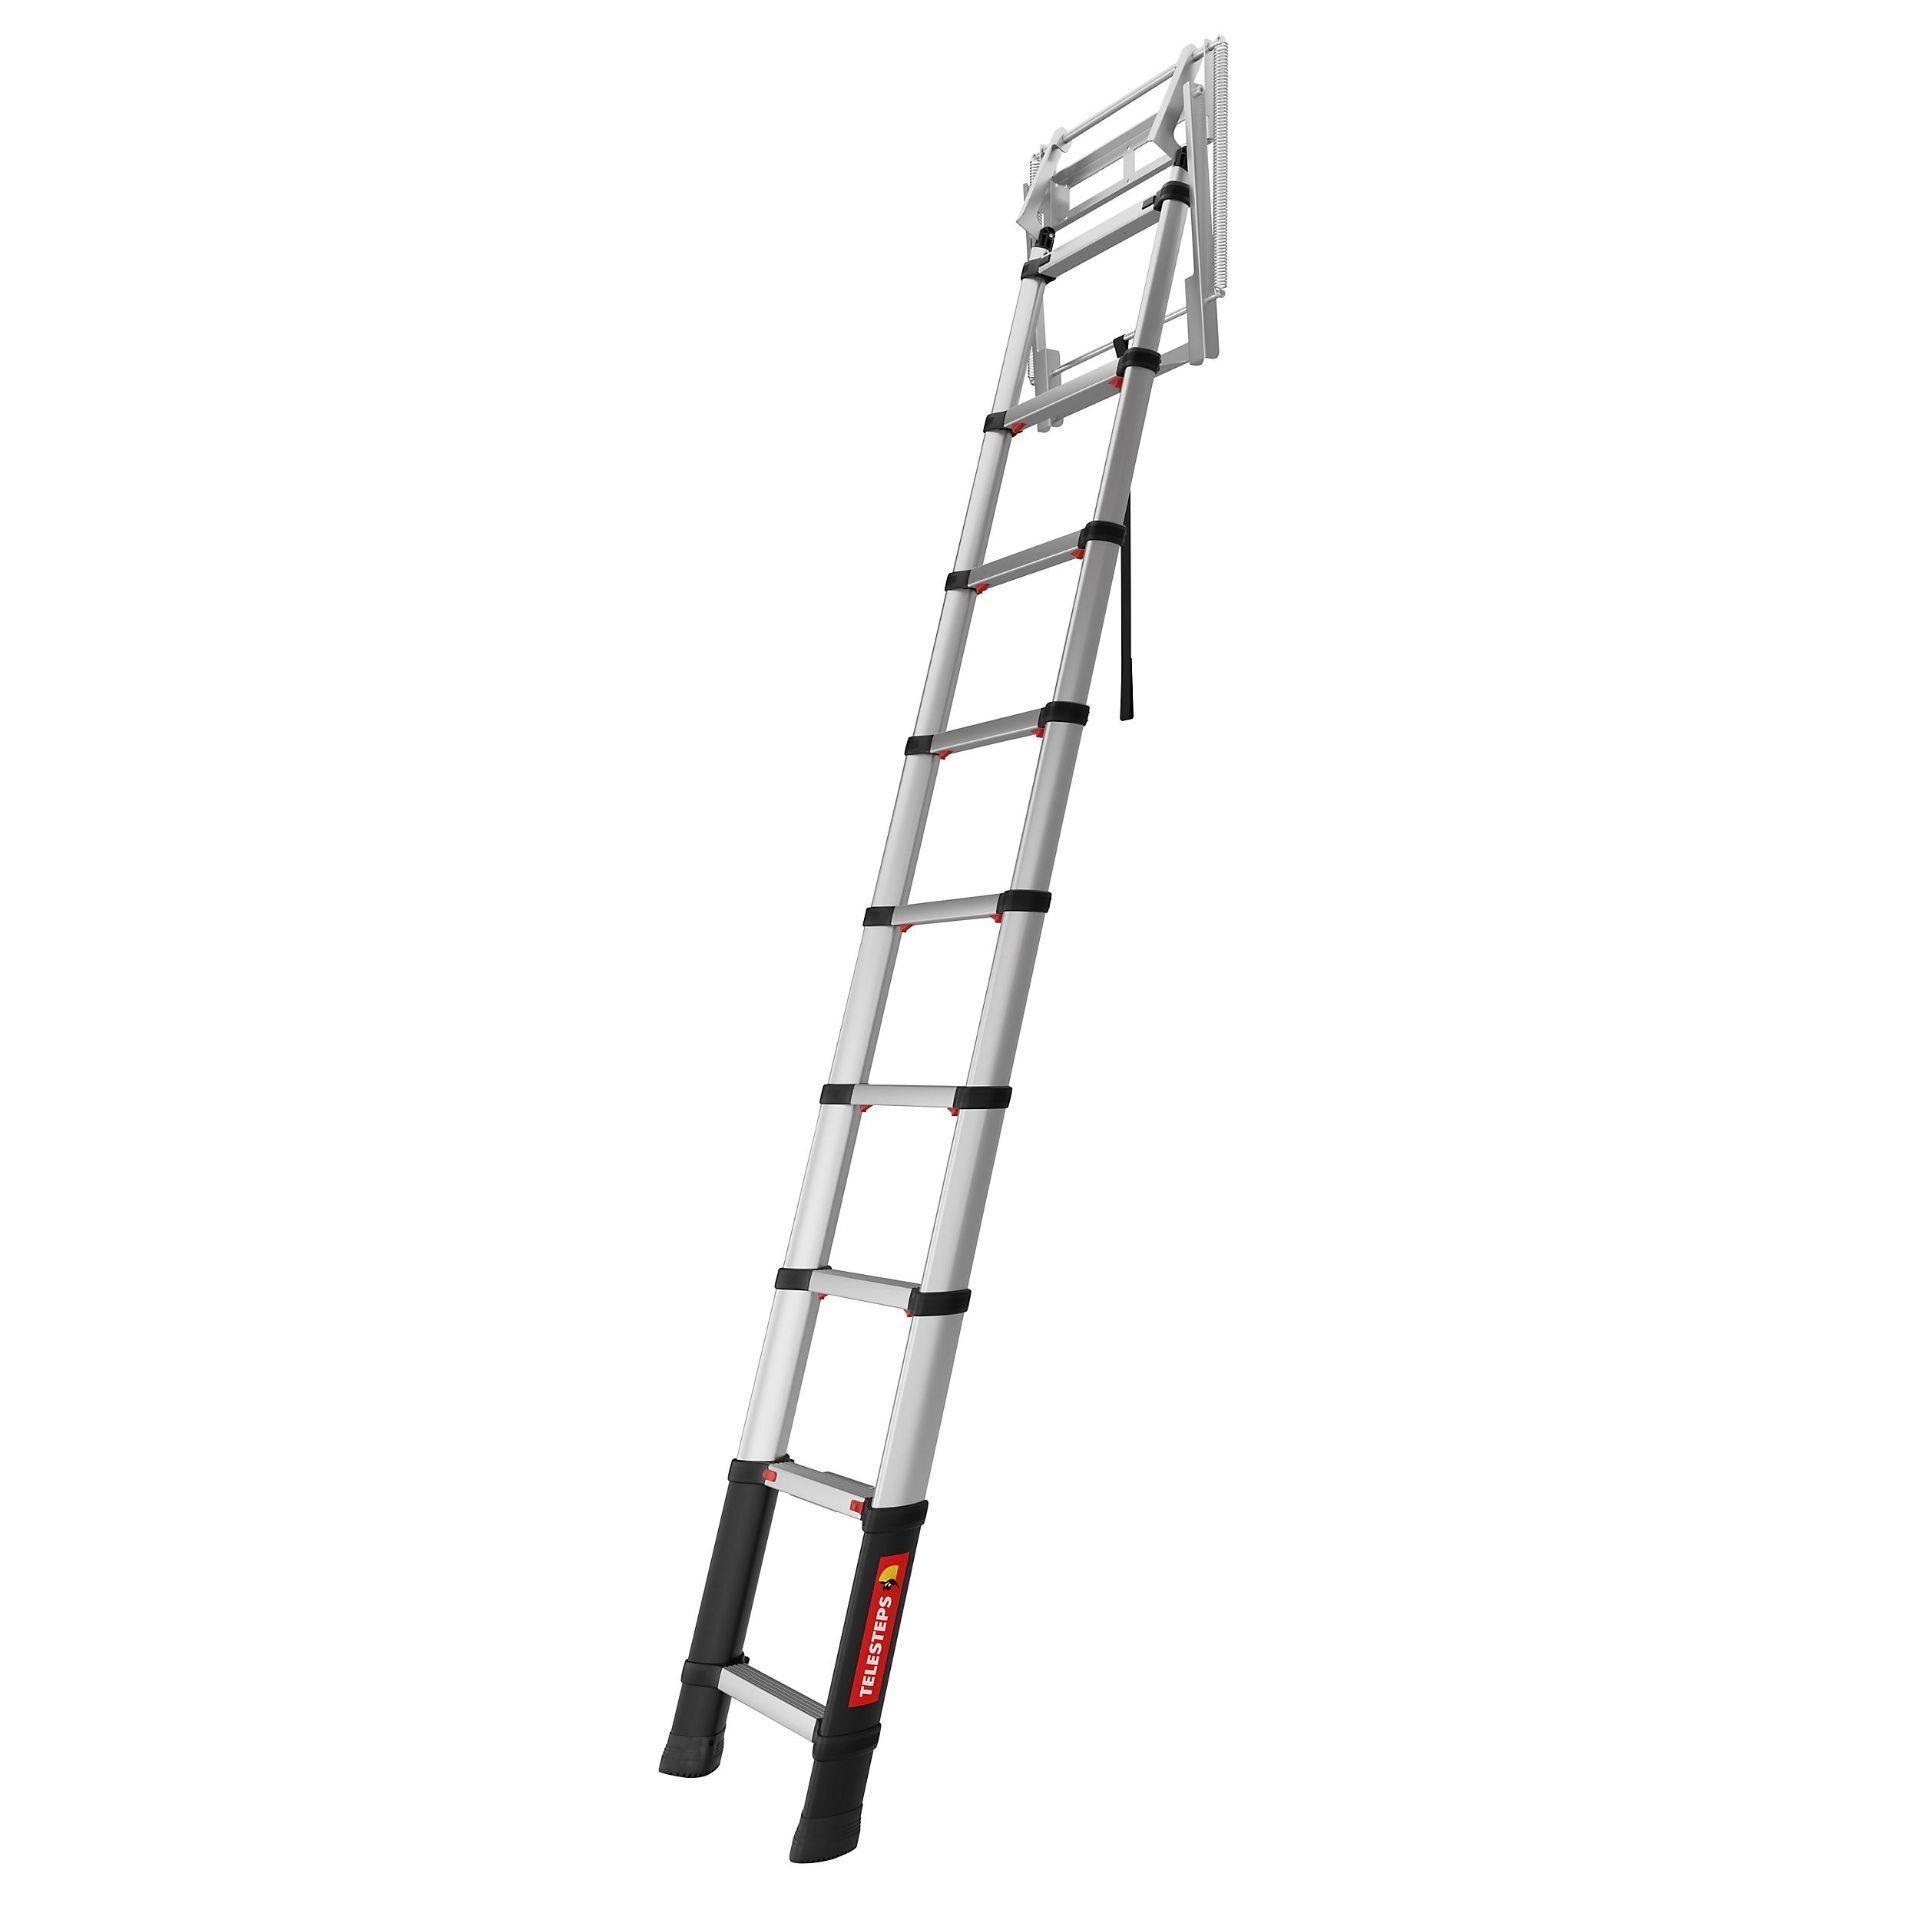 Brand New Telesteps Mini Loft Ladder - Triangular Profile 72324-541, With Telesteps simple lock - Image 2 of 5